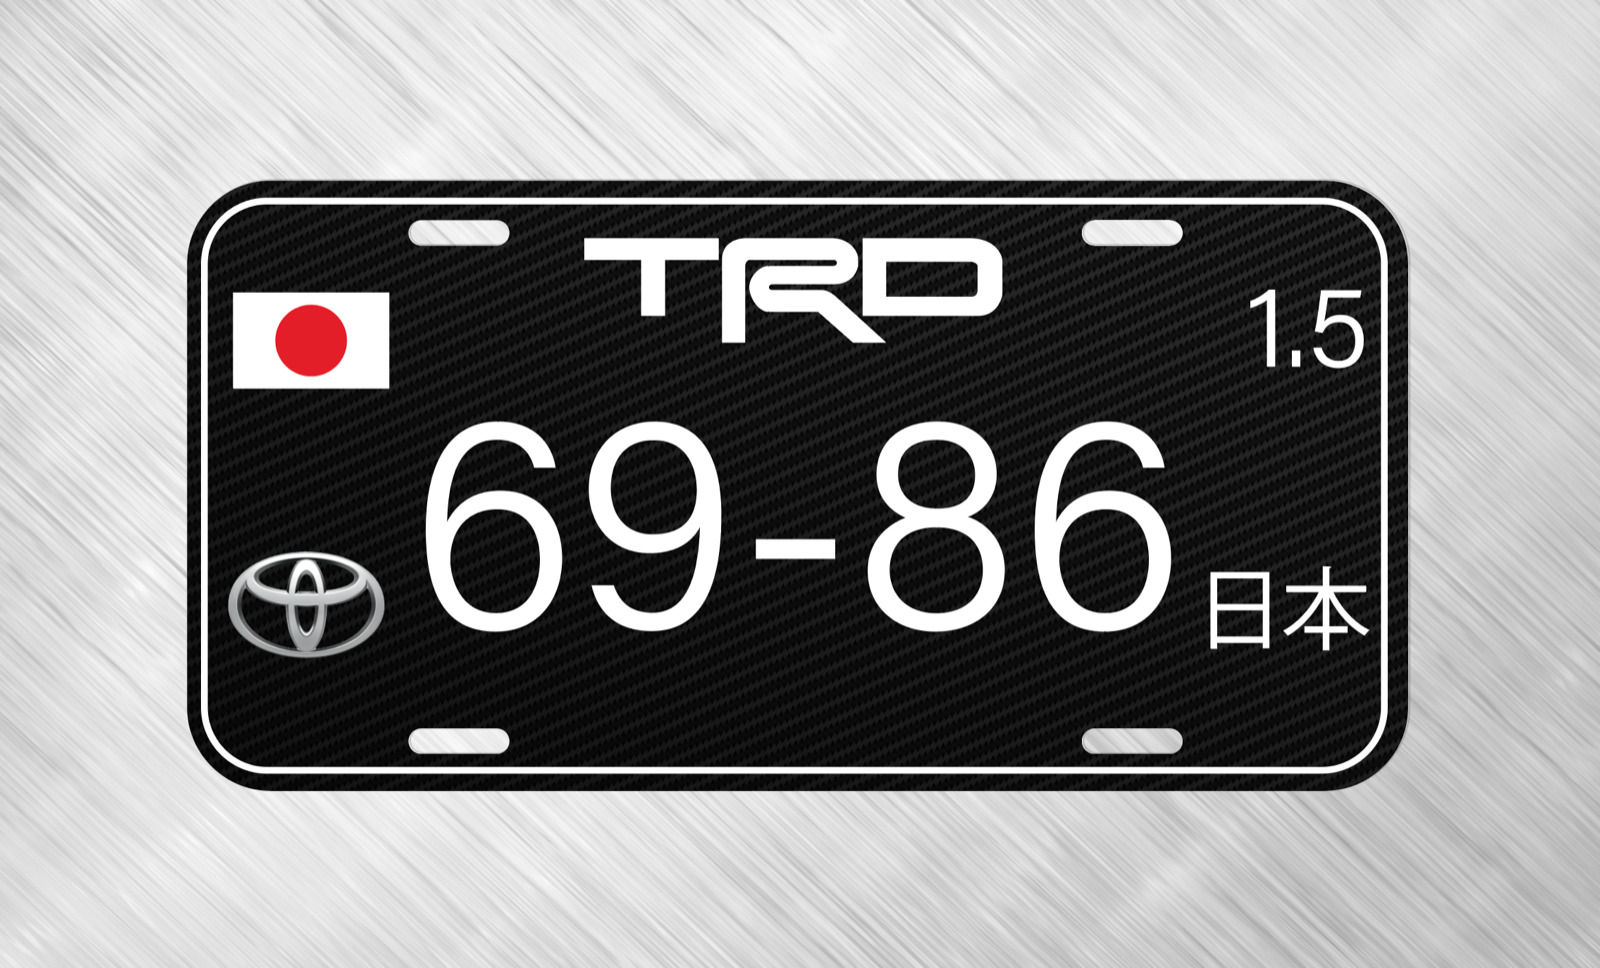 Simulated Carbon Fiber TRD JDM Toyota  License Plate Auto Car Tag  